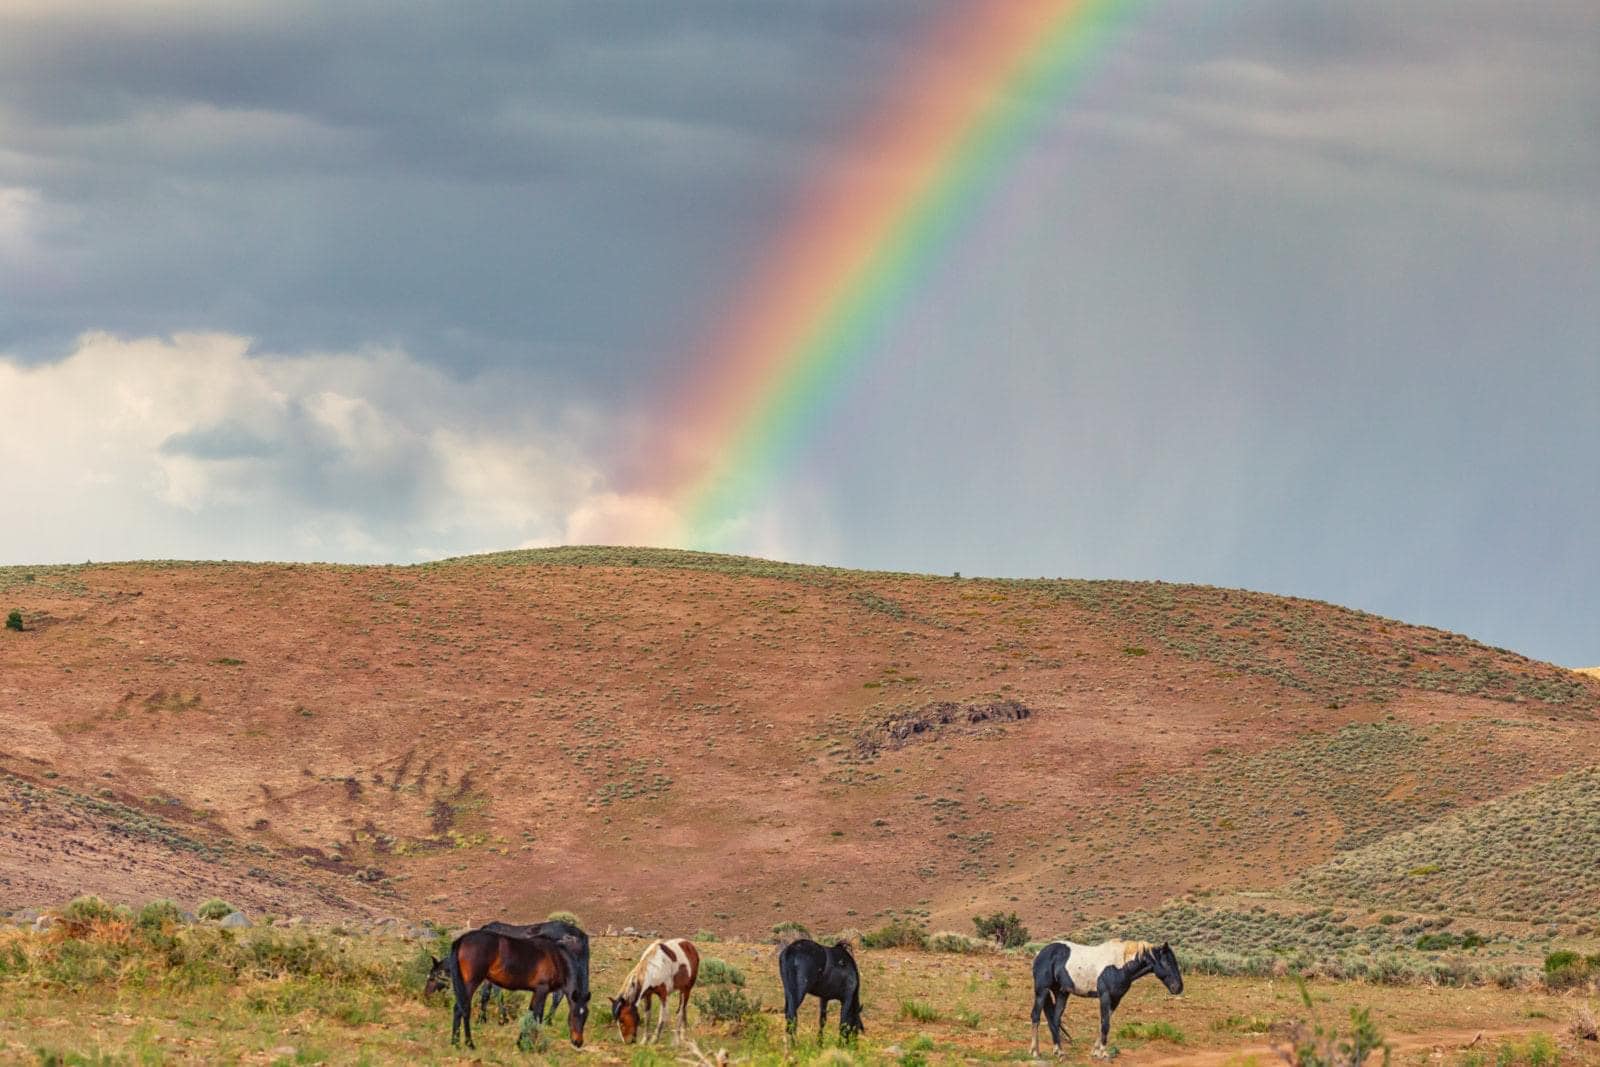 The Wild Horses Of The Virginia Range, Nevada